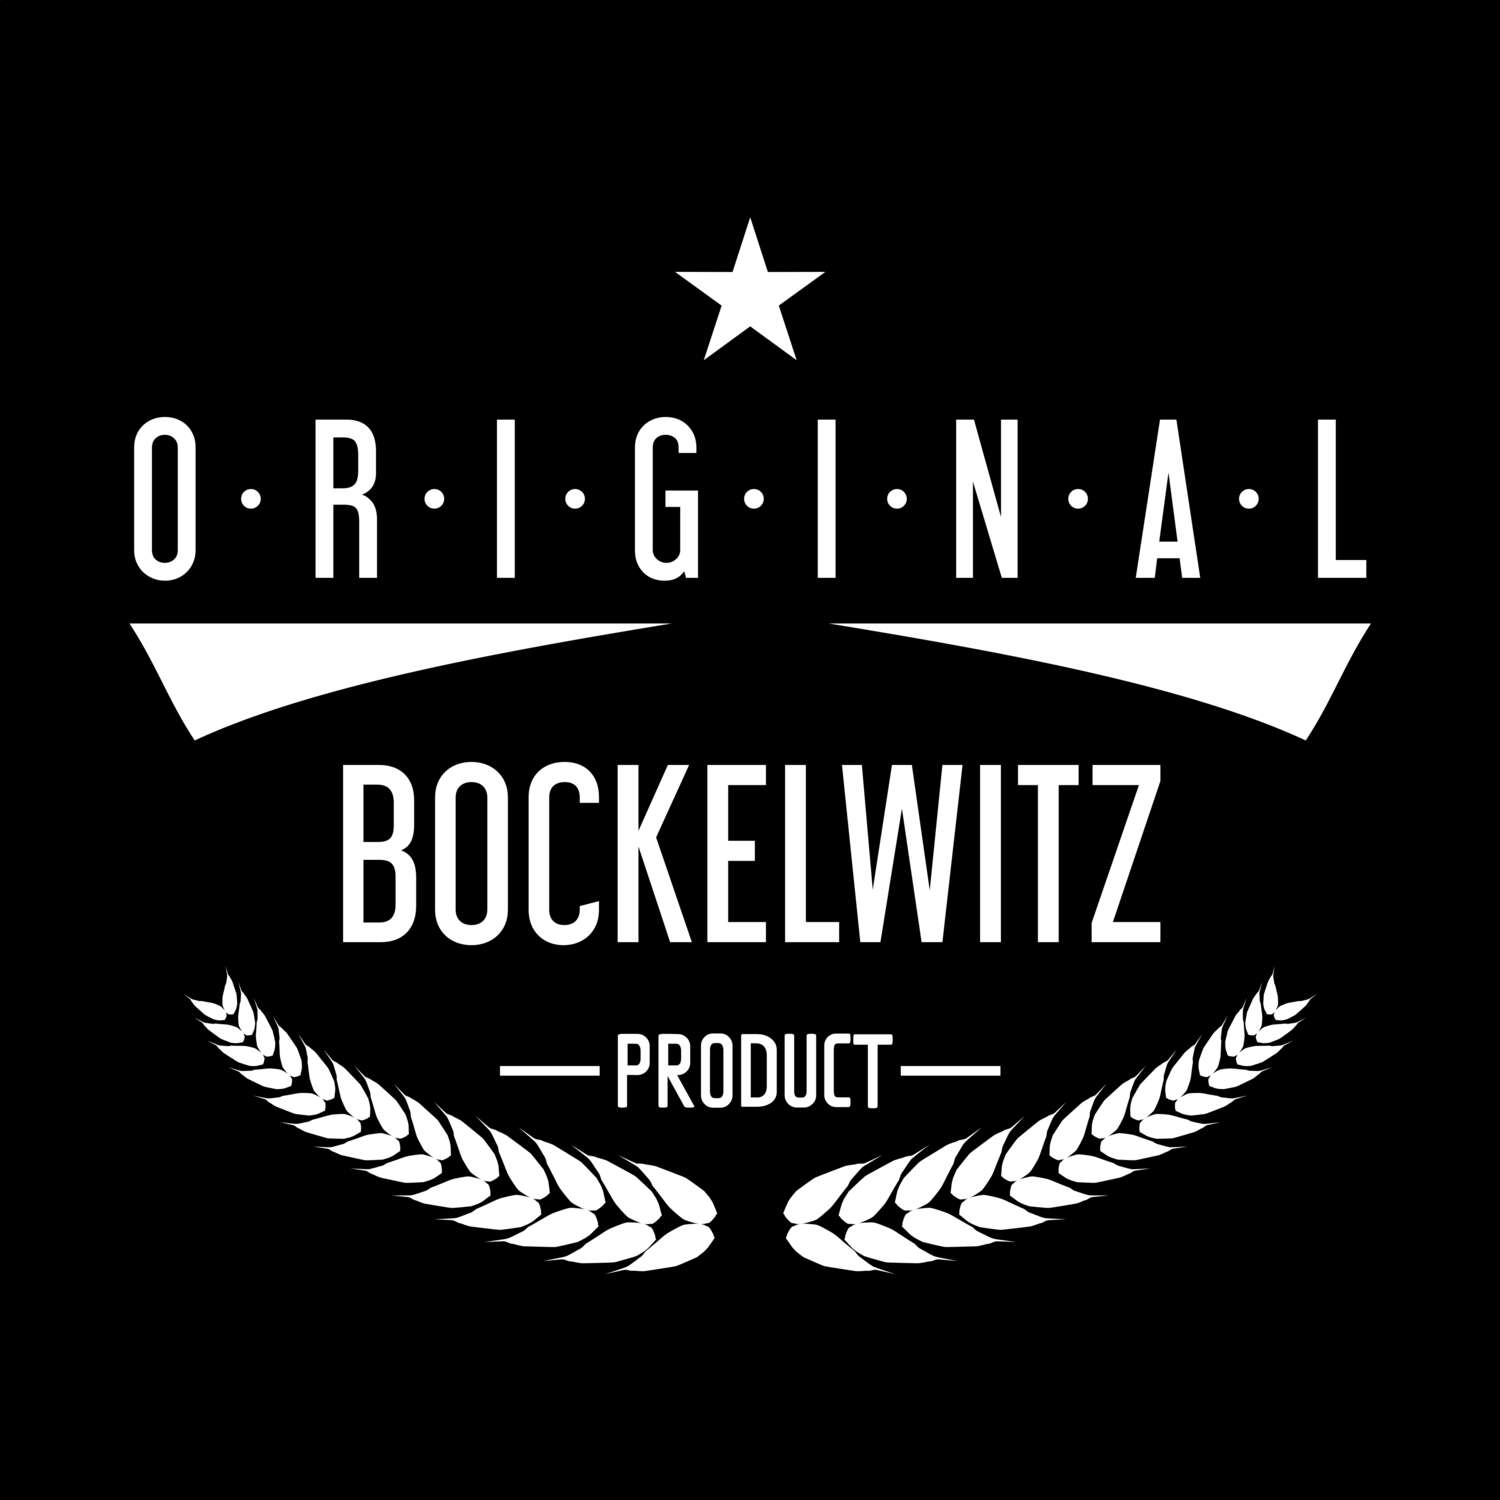 Bockelwitz T-Shirt »Original Product«